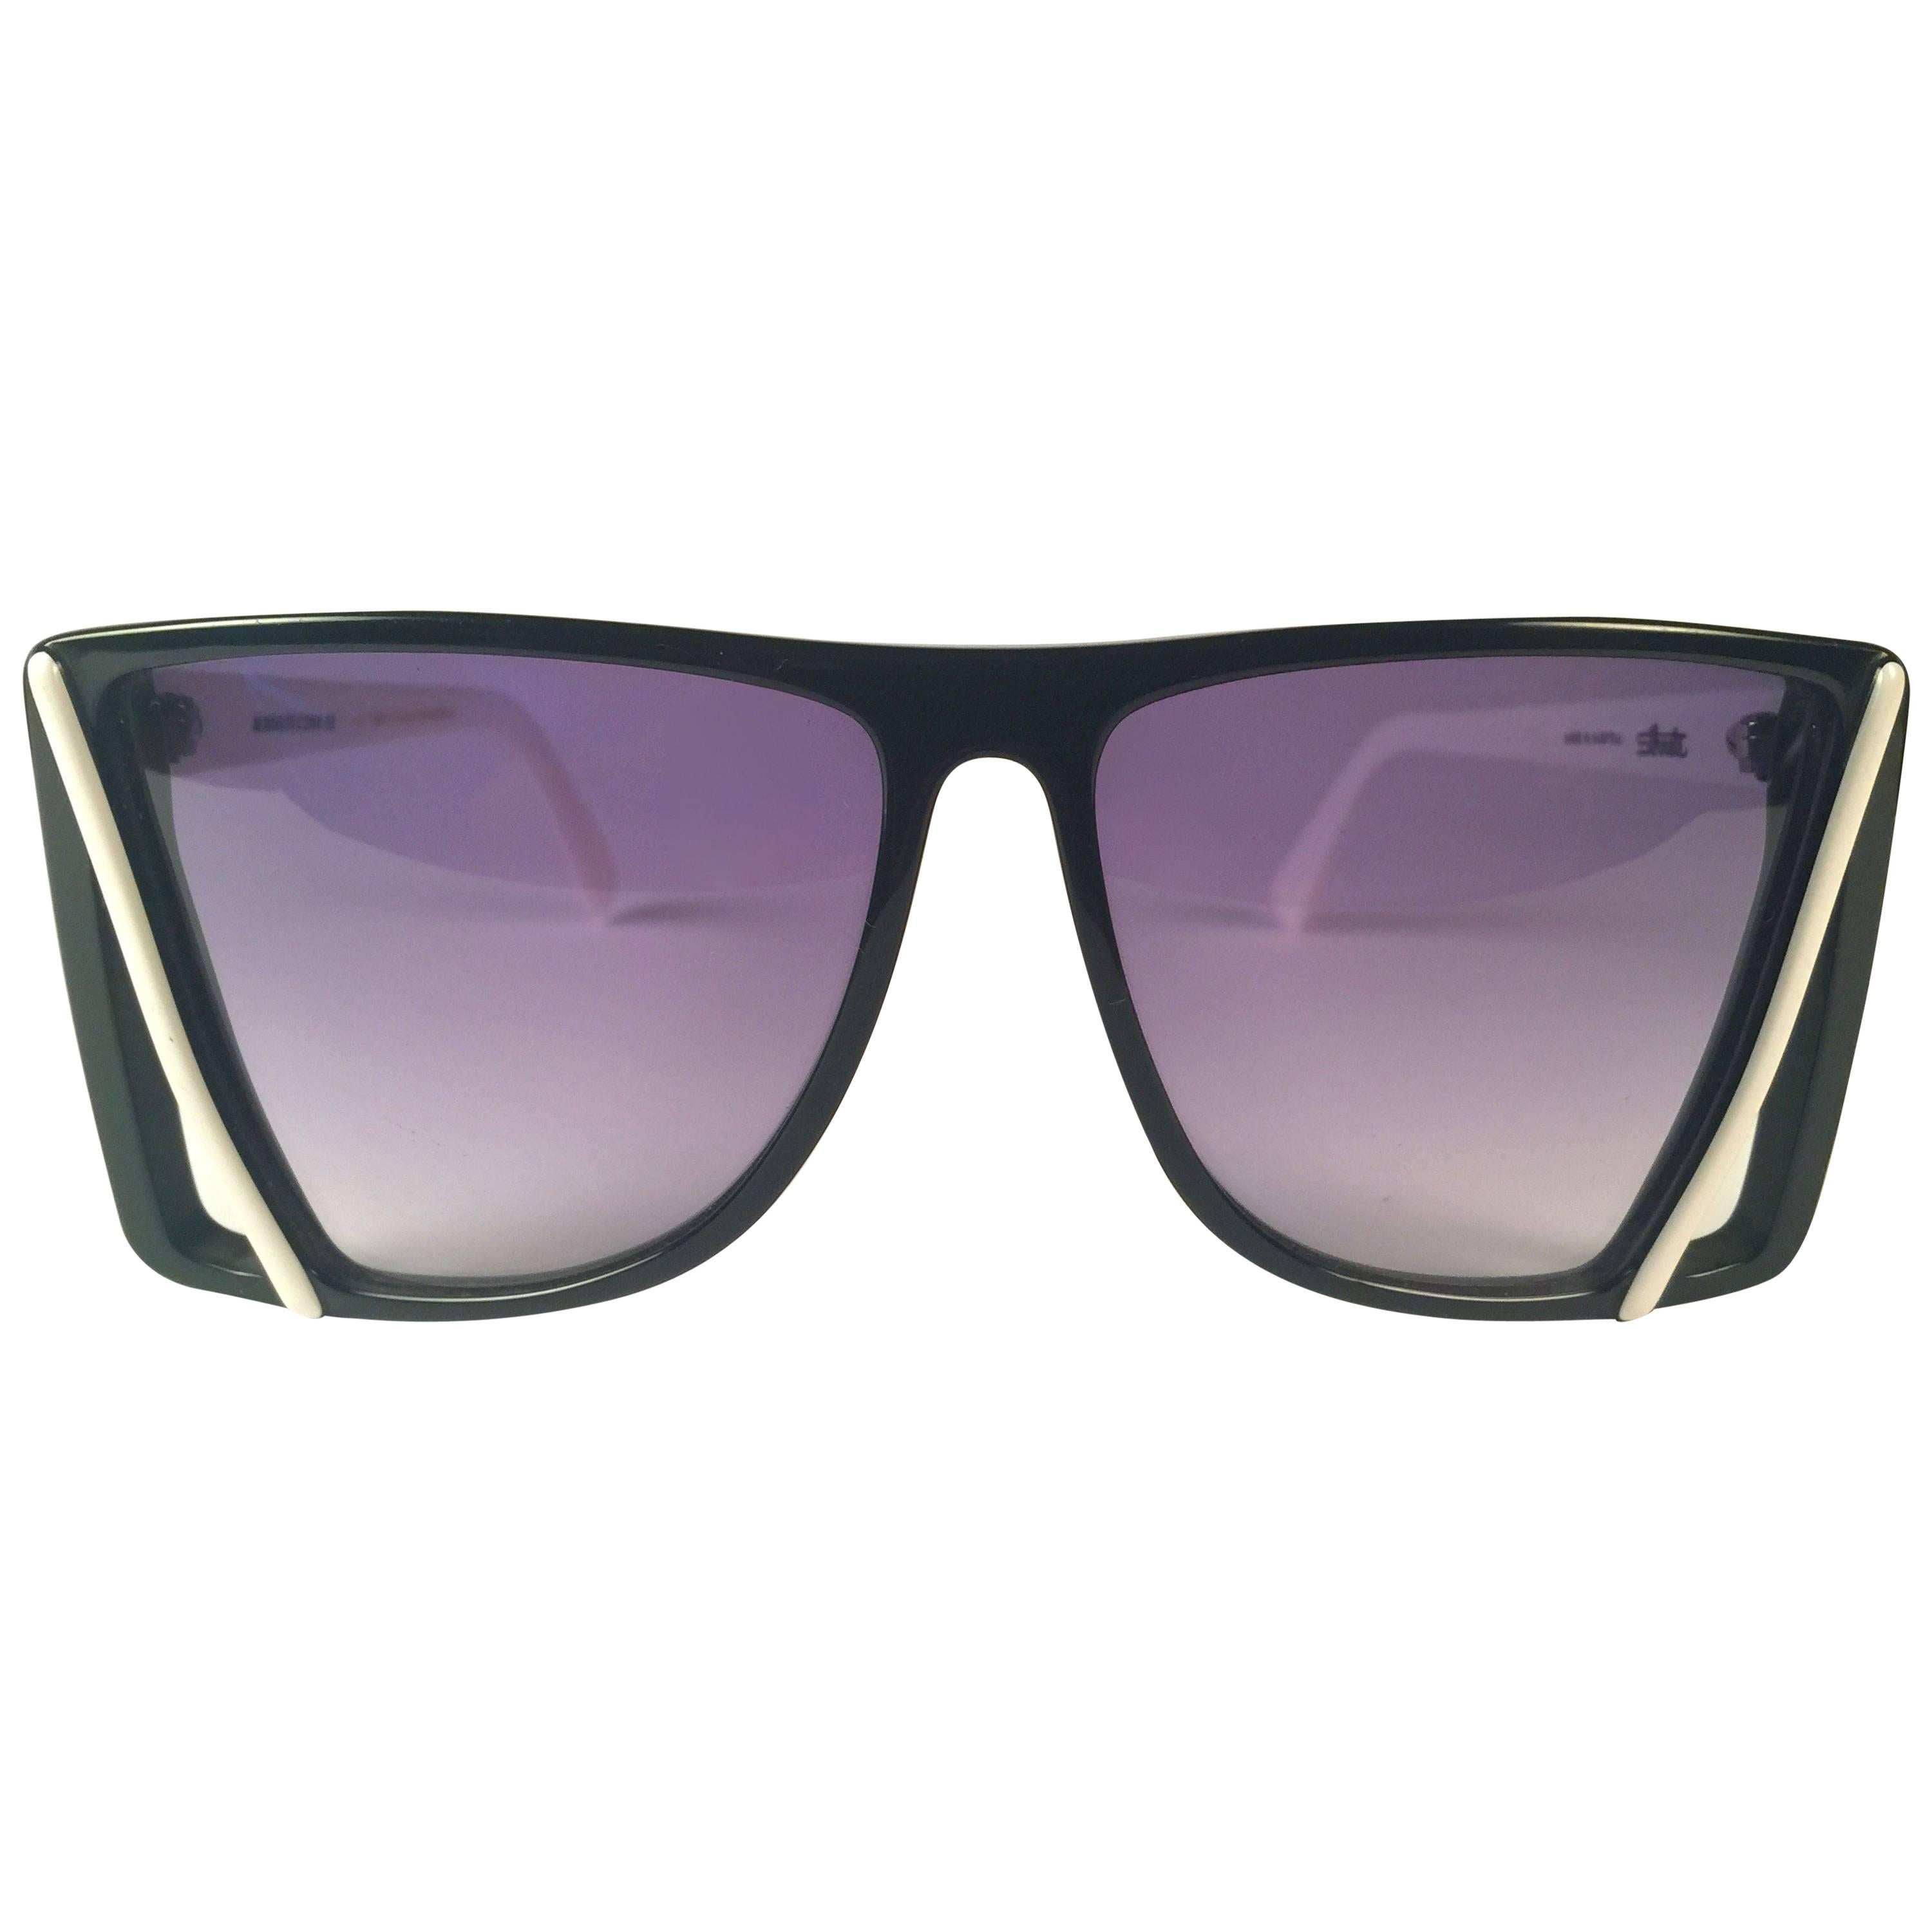 New Vintage Silhouette Black & White Purple Lenses 1980's Sunglasses